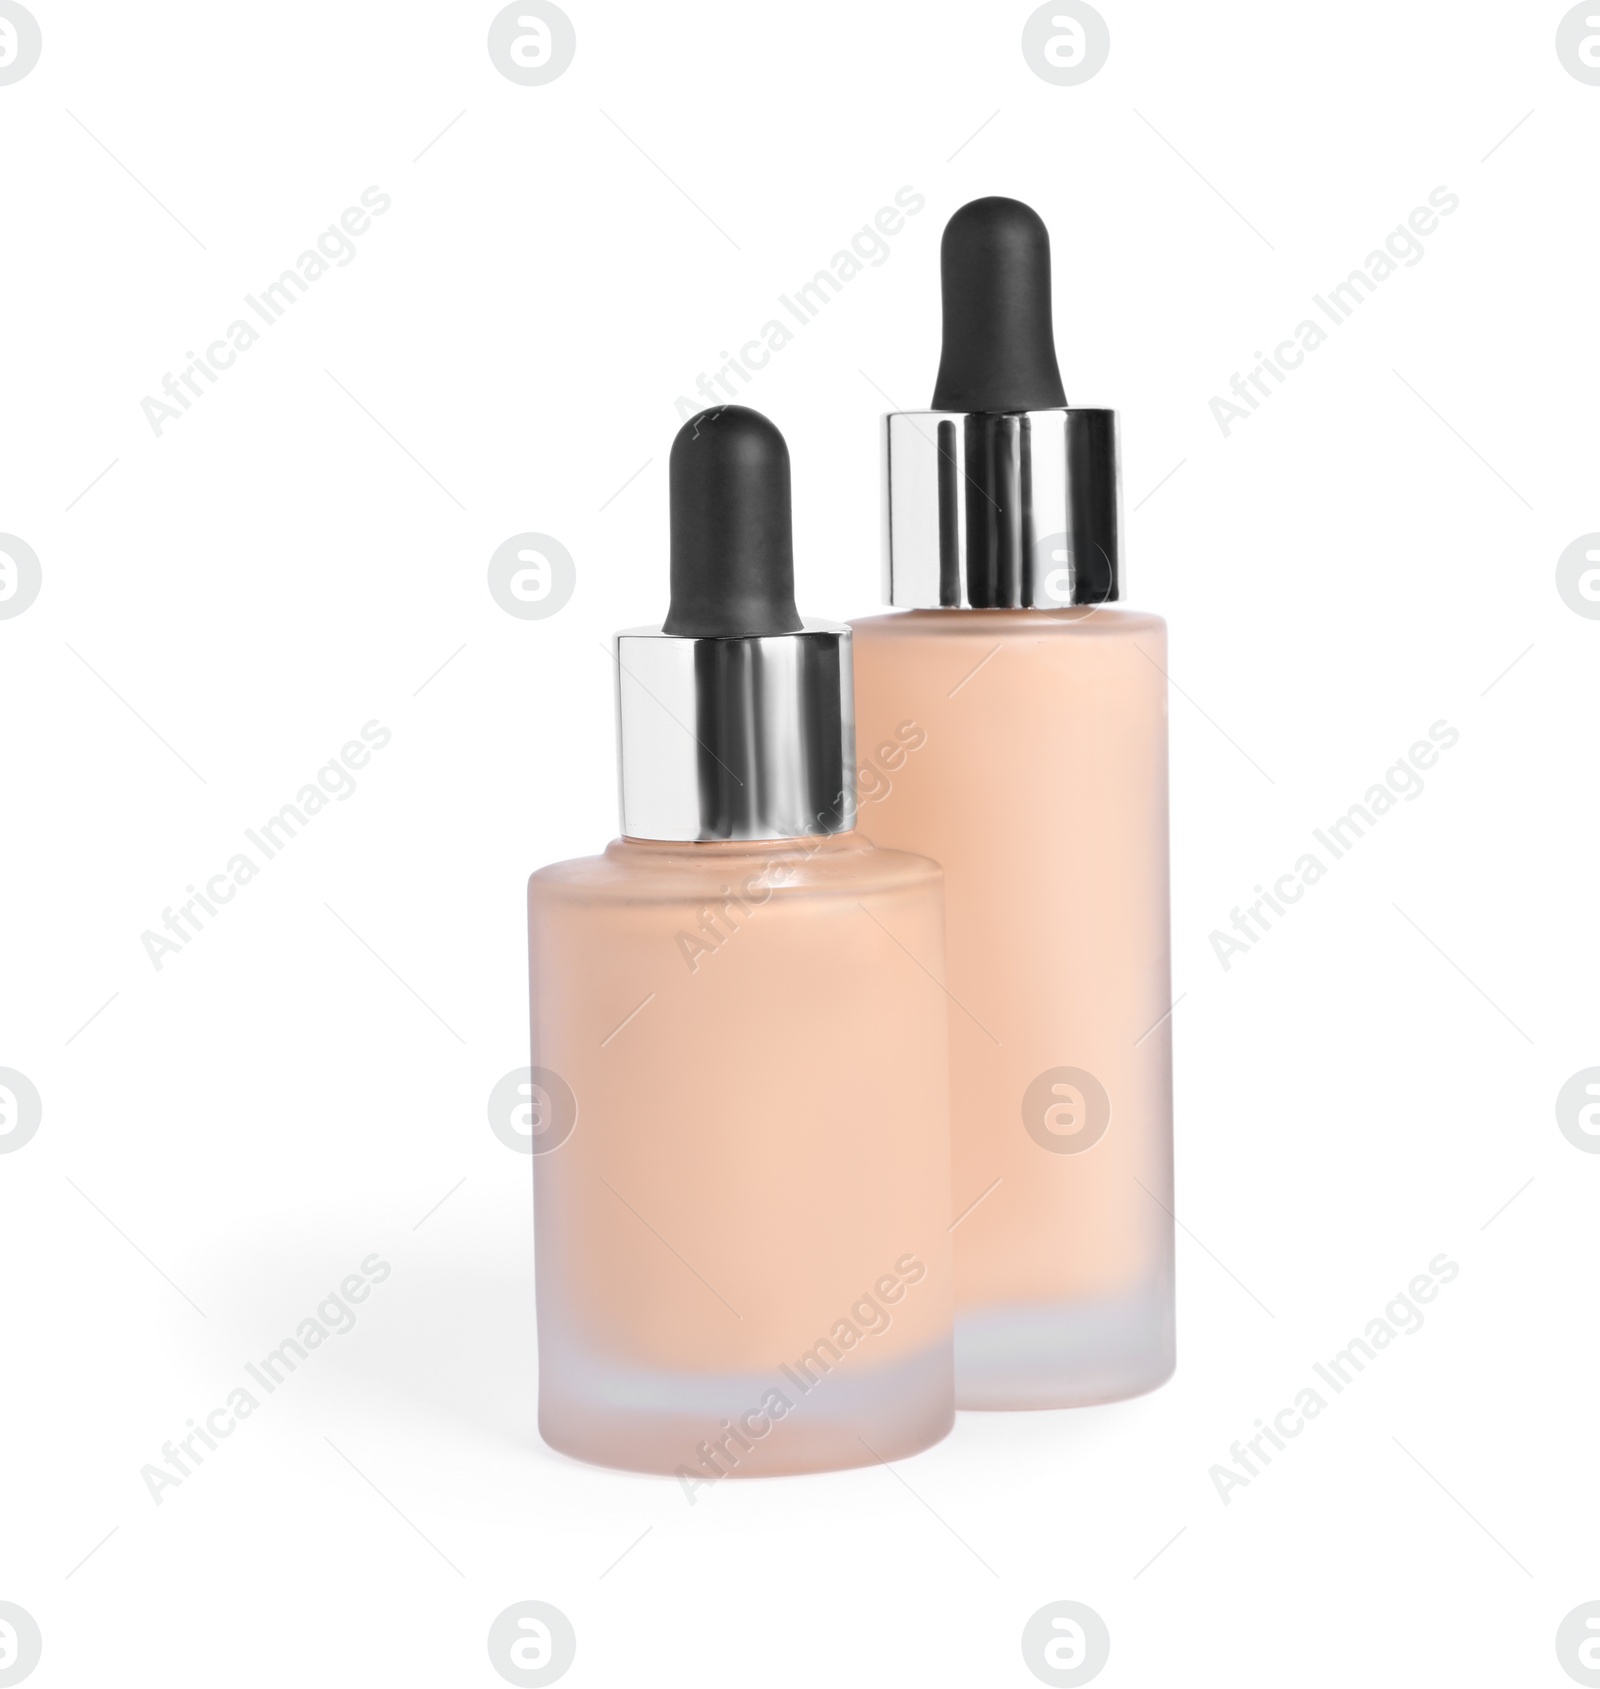 Photo of Bottles of skin foundation on white background. Makeup product